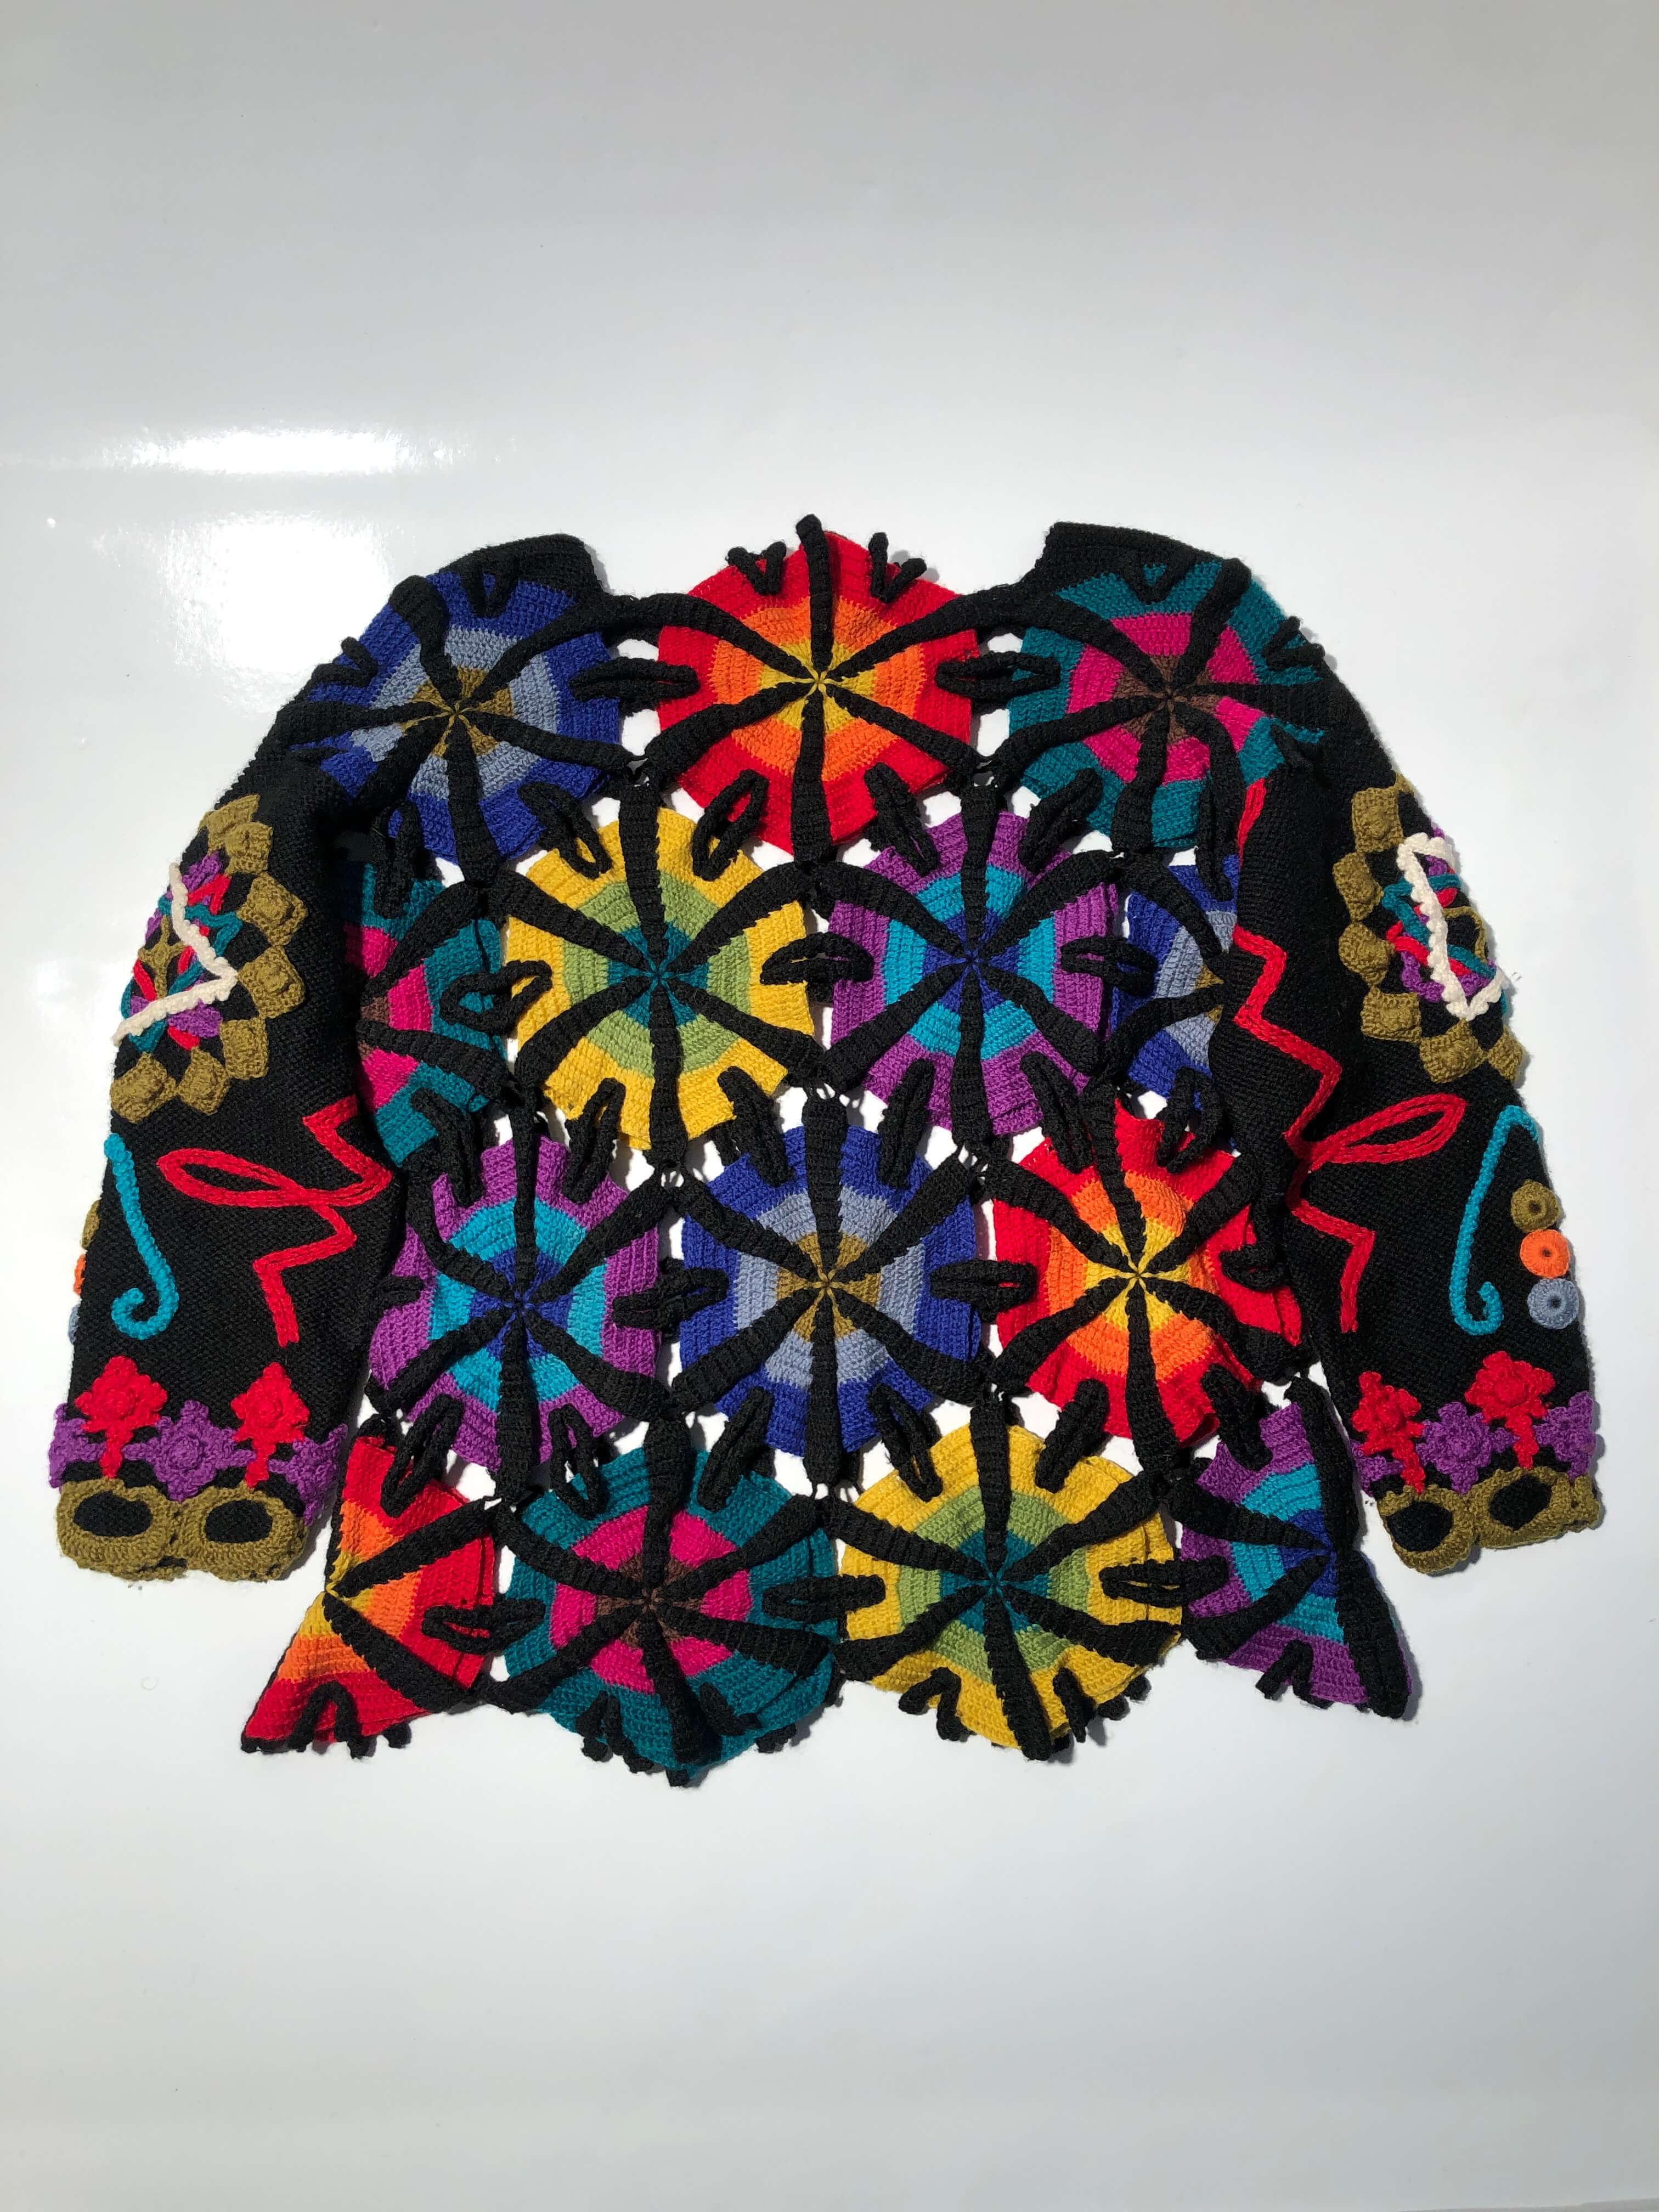 Kansai O2 Hexagonal granny square sweater